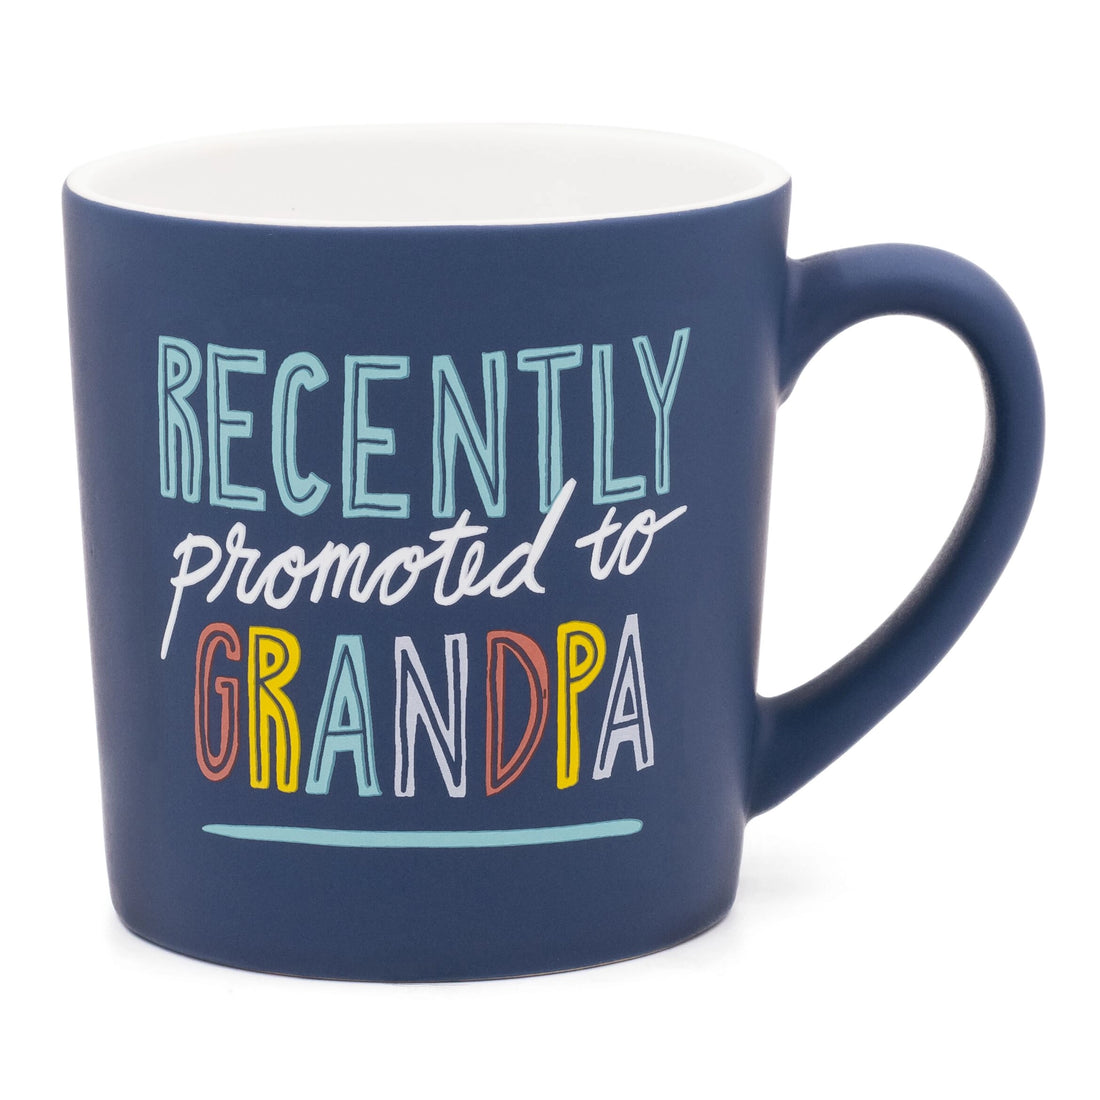 Recently Promoted to Grandpa Mug